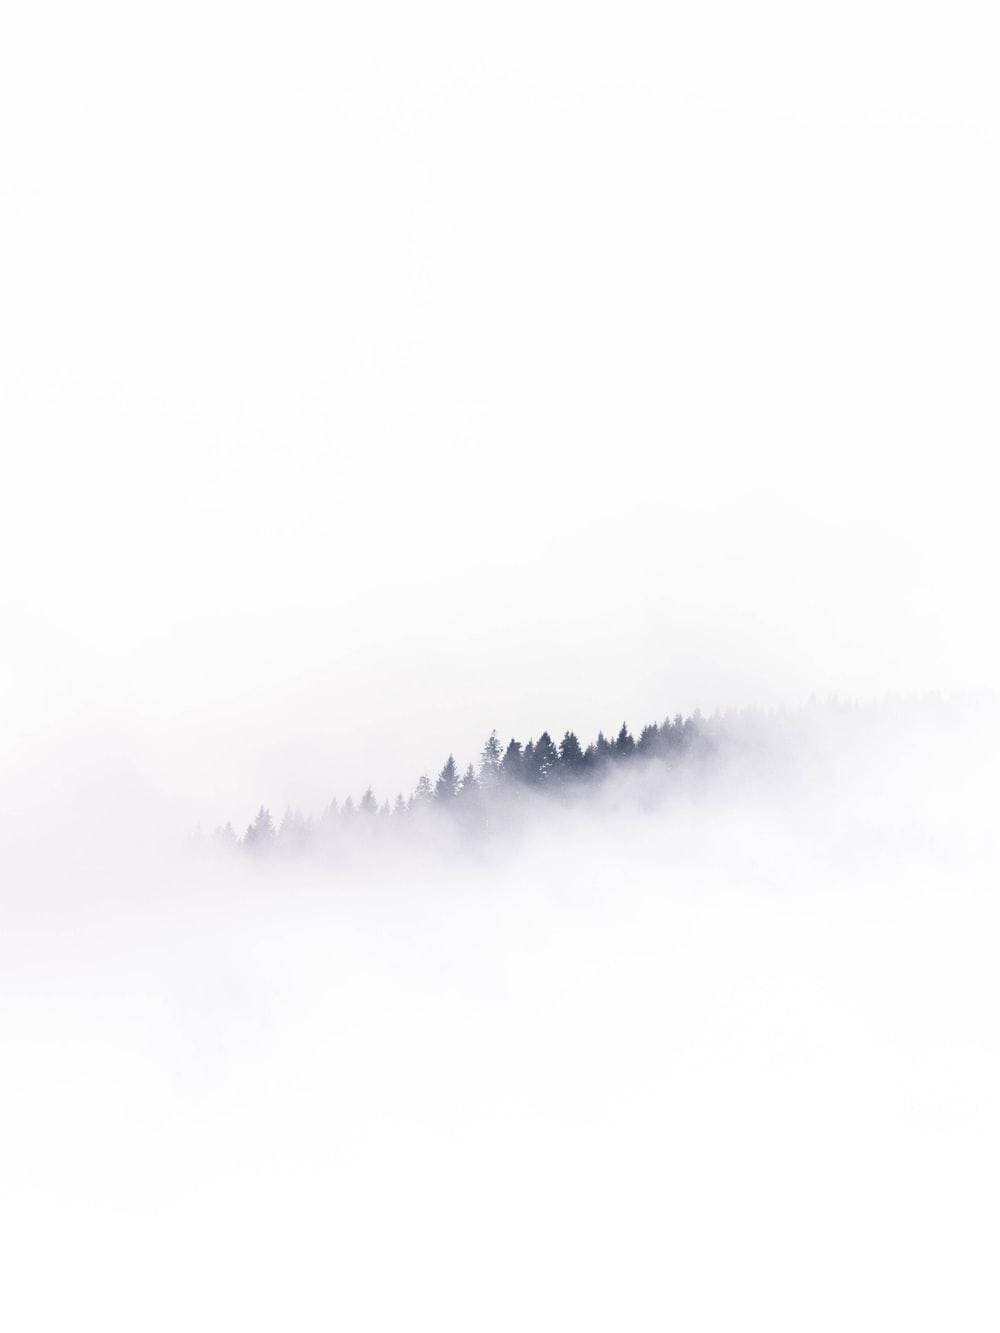 Smokey White Color Mountain Wallpaper